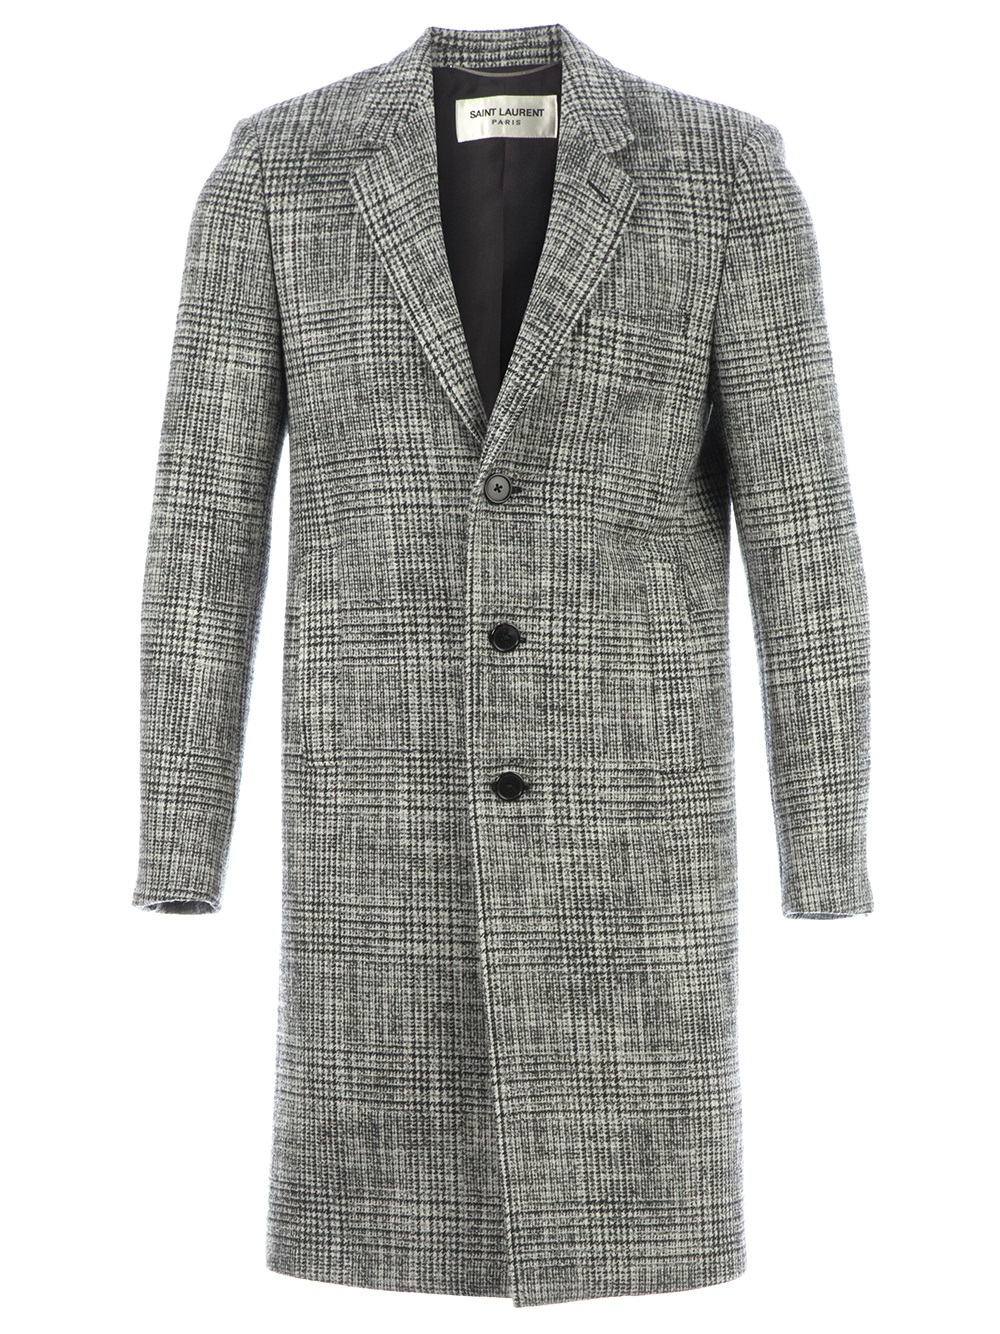 Saint Laurent Checked Coat in Black (Gray) for Men - Lyst